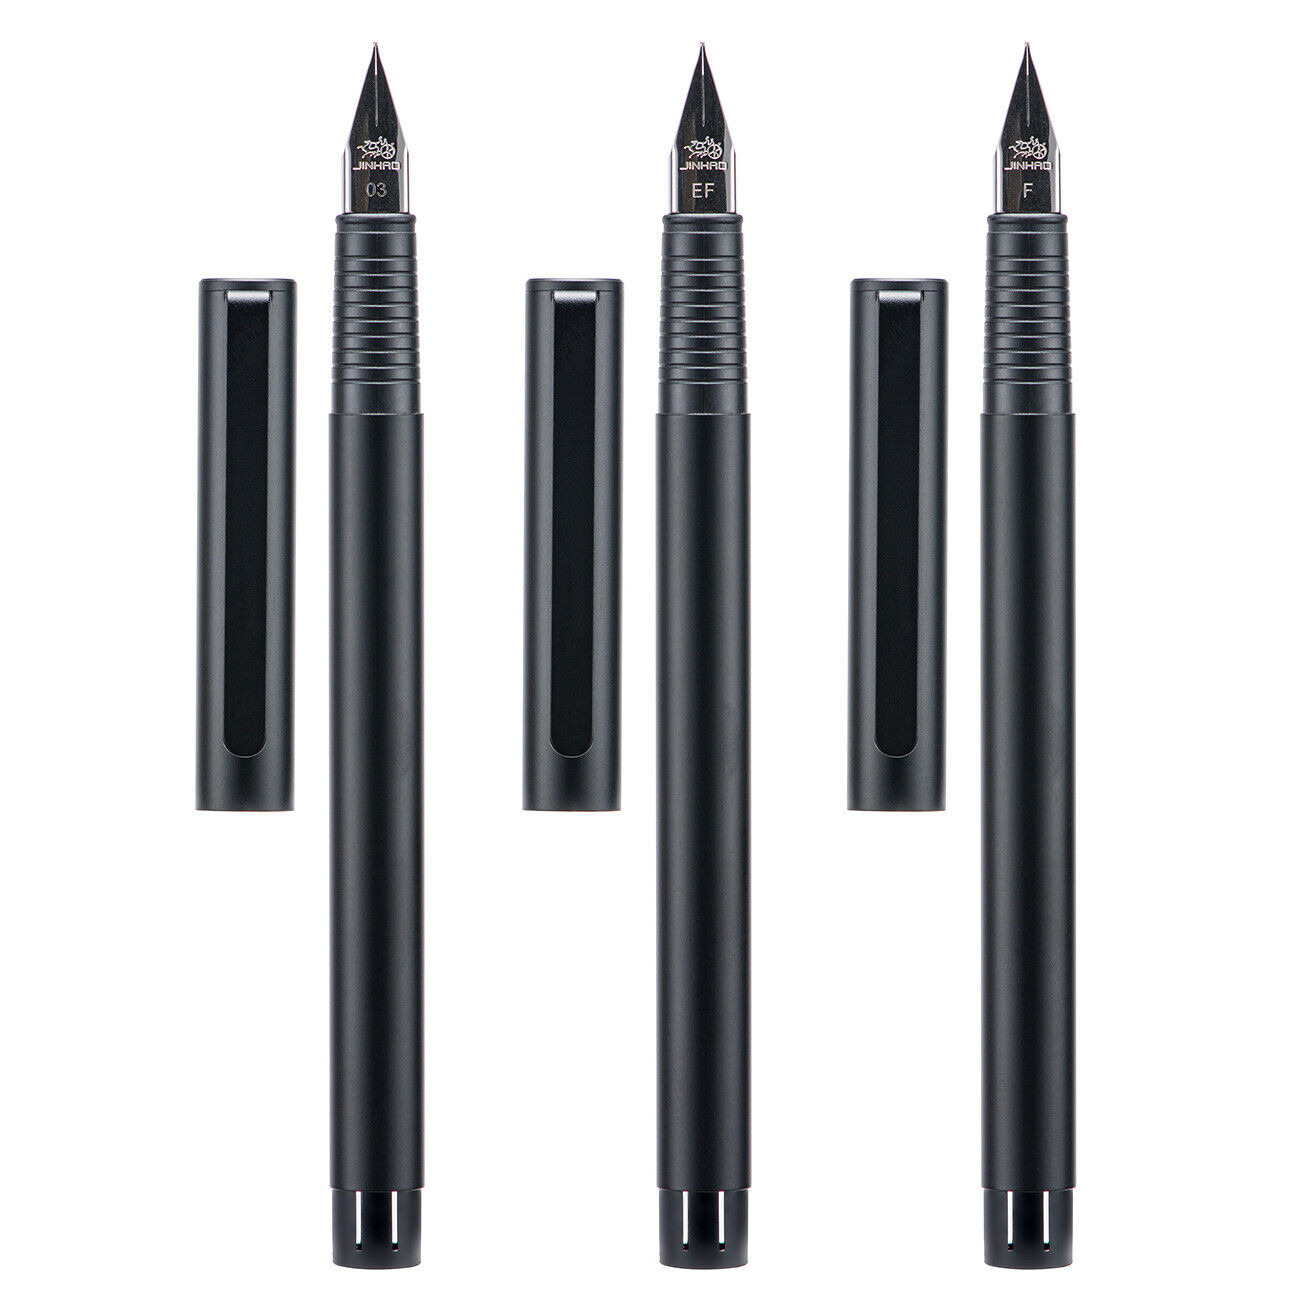 3 PCS Jinhao 65 Fountain Pen 03/EF/F Nib with Converter, Matte Black, Silver Pen